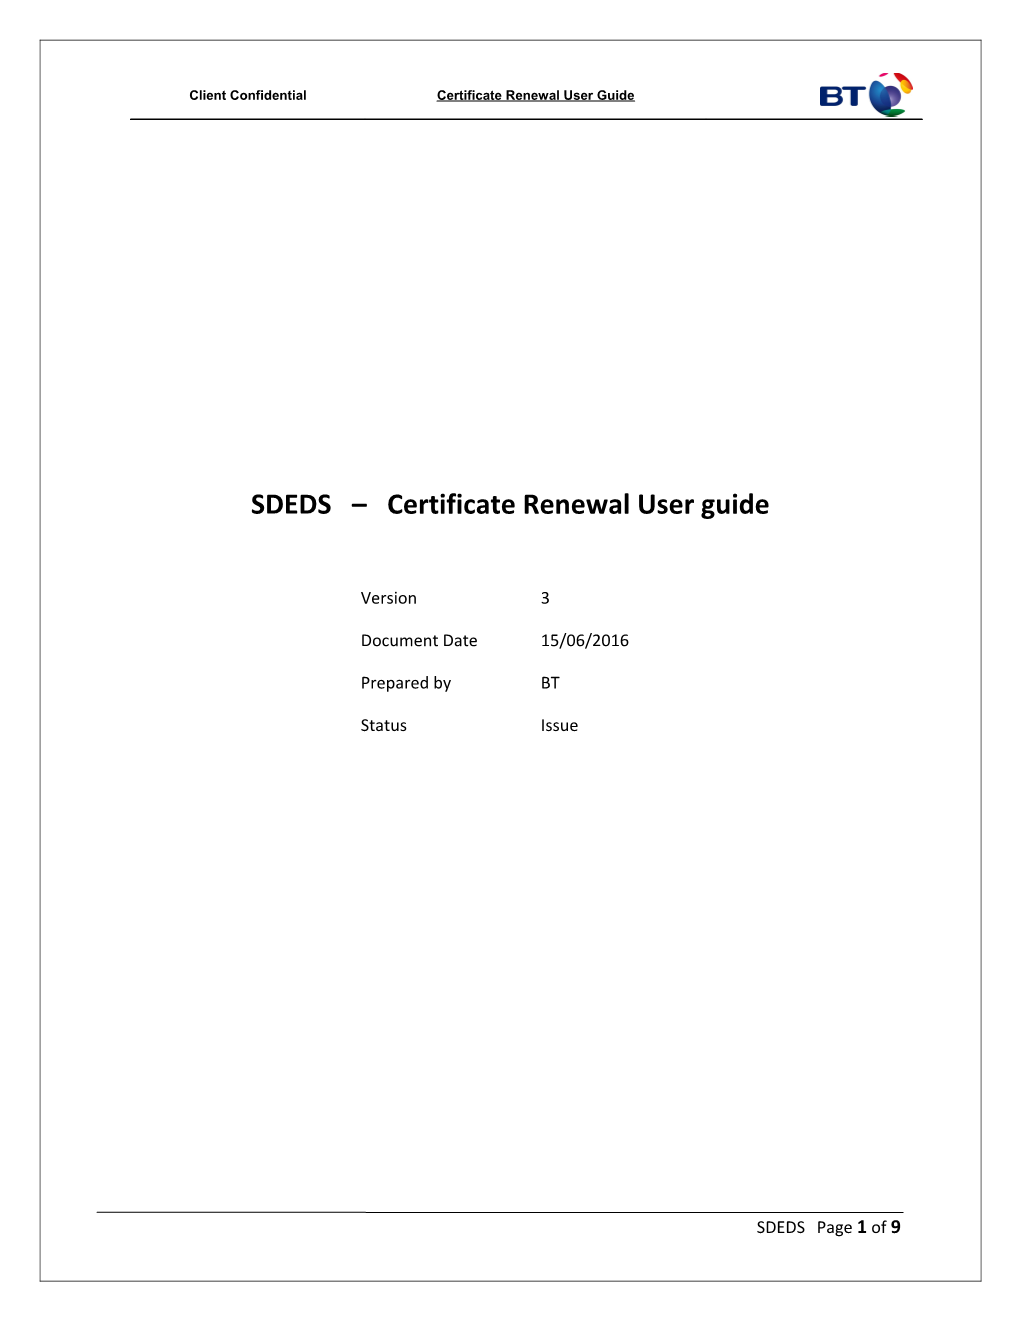 SDEDS Certificate Renewal User Guide